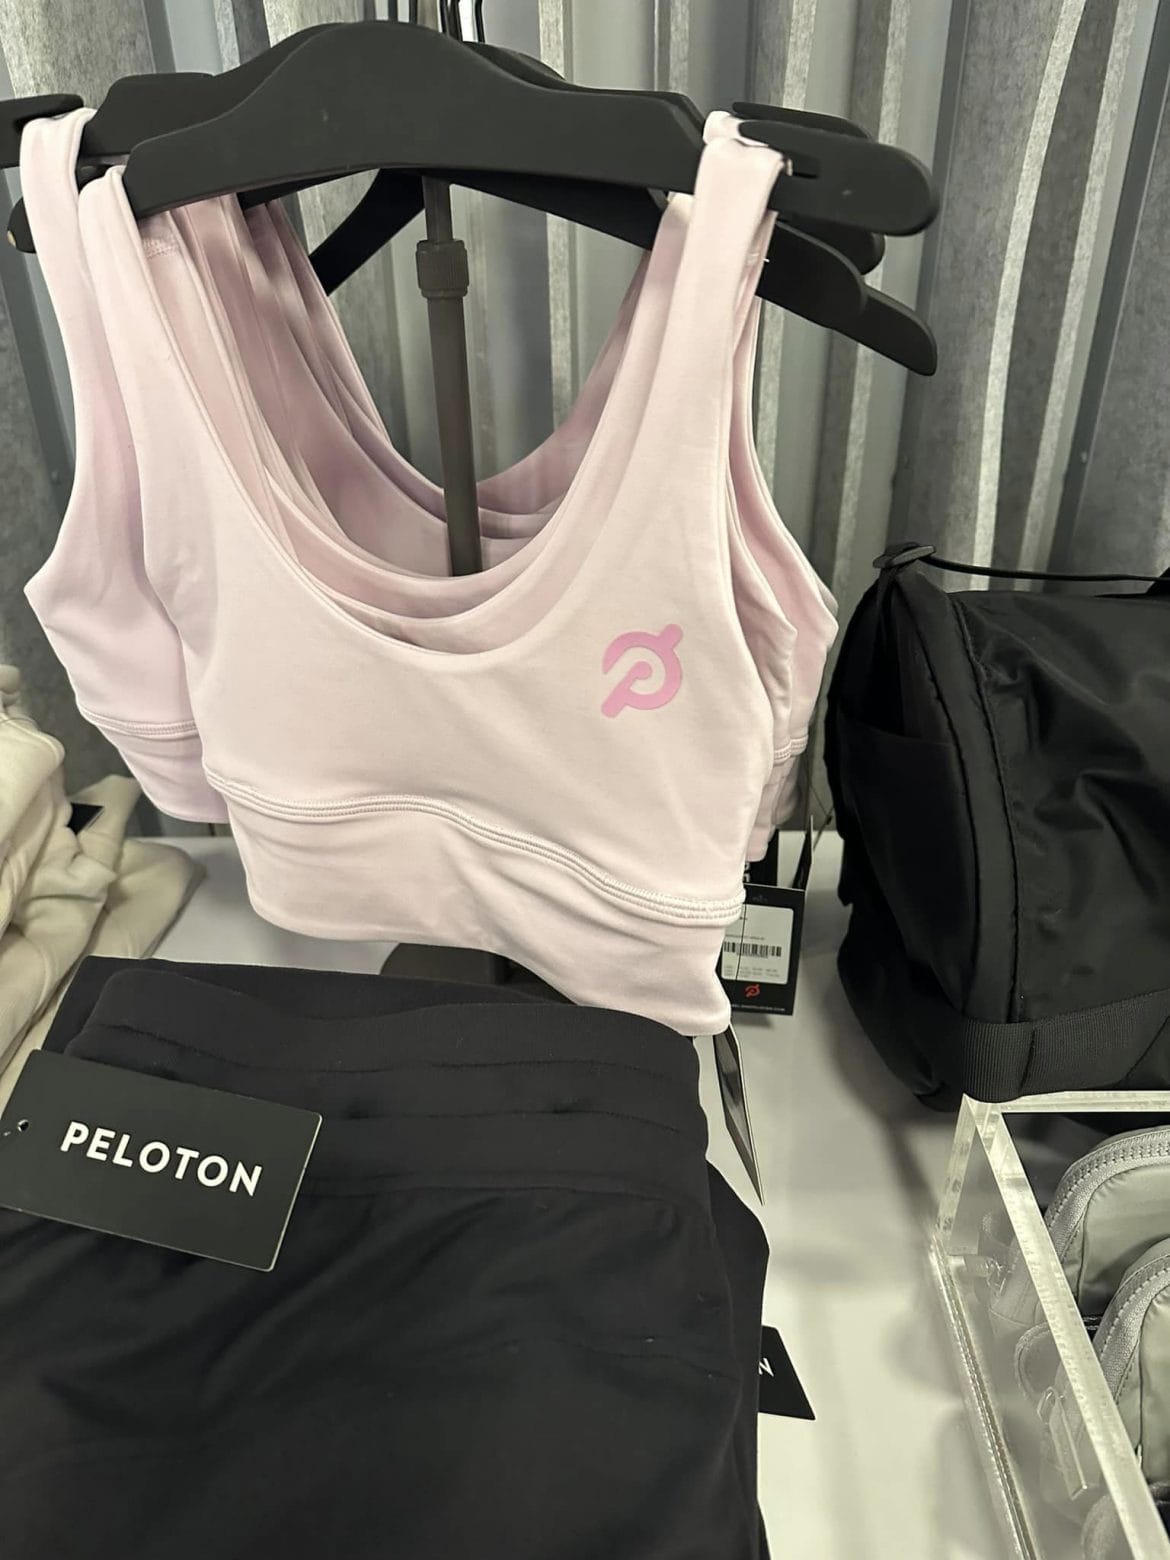 Lululemon sues Peloton over 'copy-cat' workout apparel - Saanich News